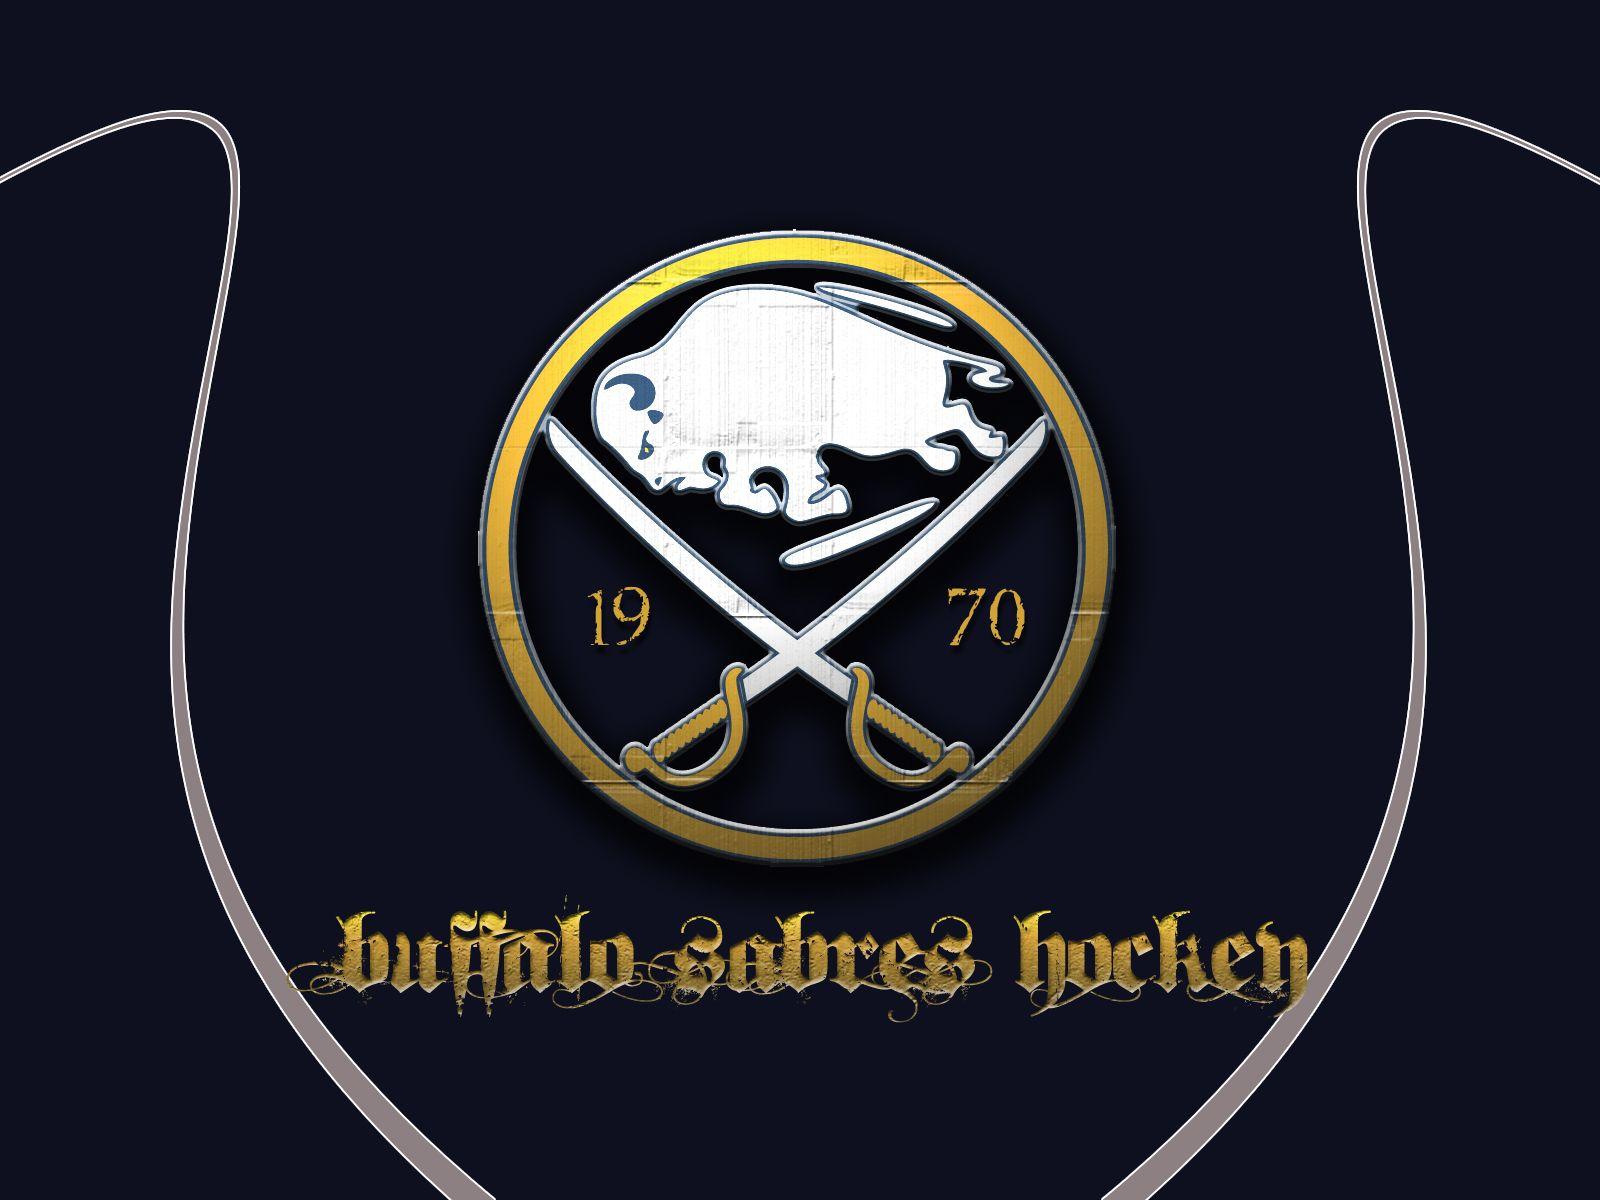 بوفالو سابرس (Buffalo Sabres)